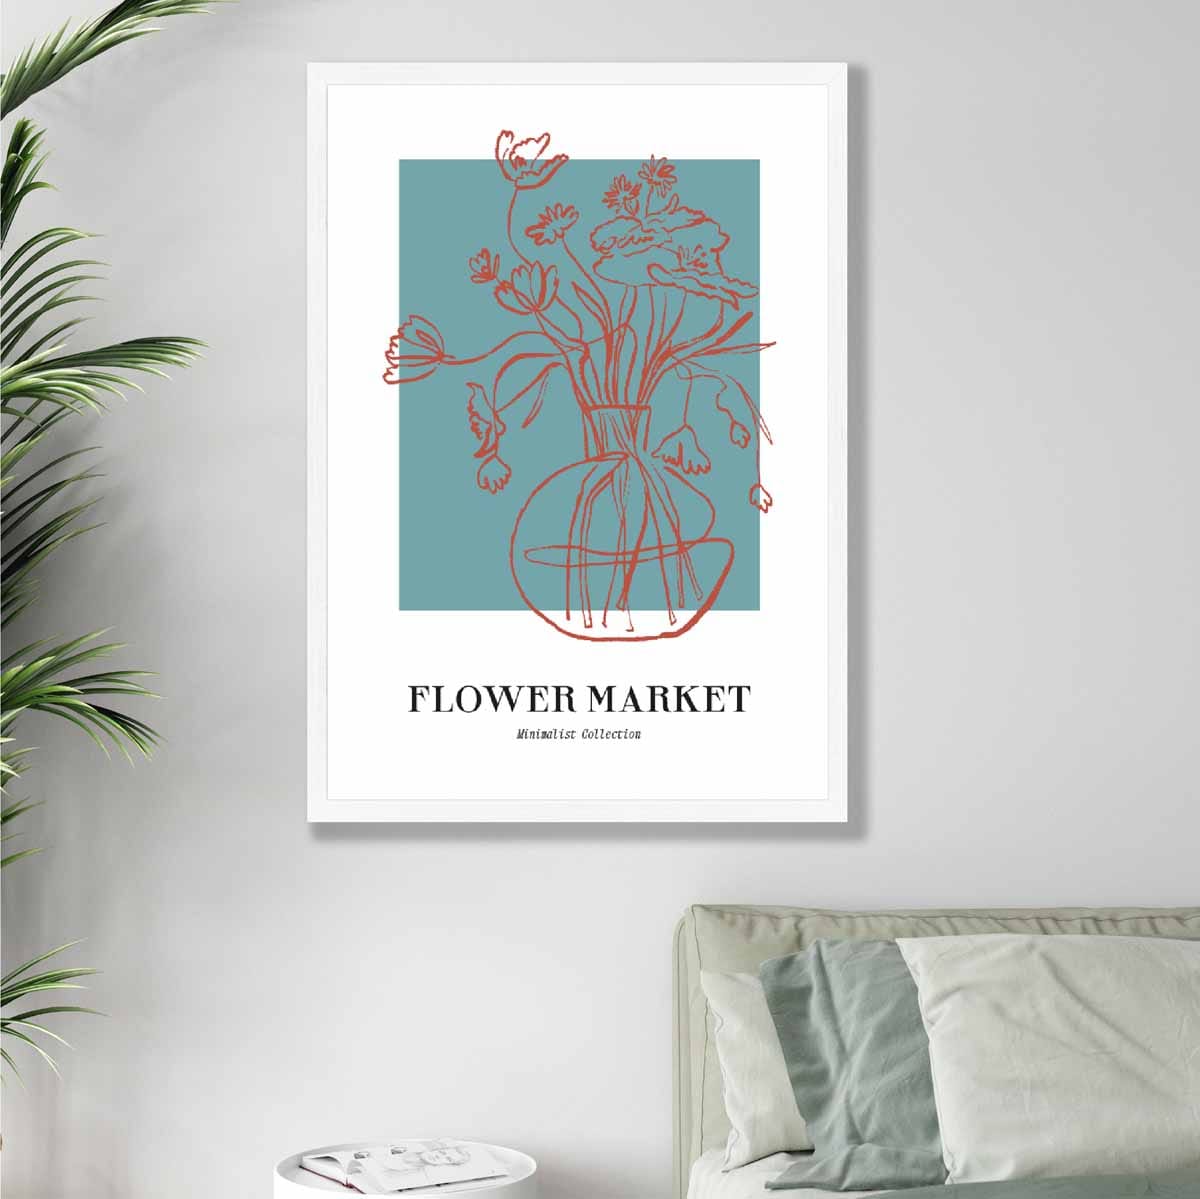 Flower Market Minimalist Poster Collection No 1 in Blue